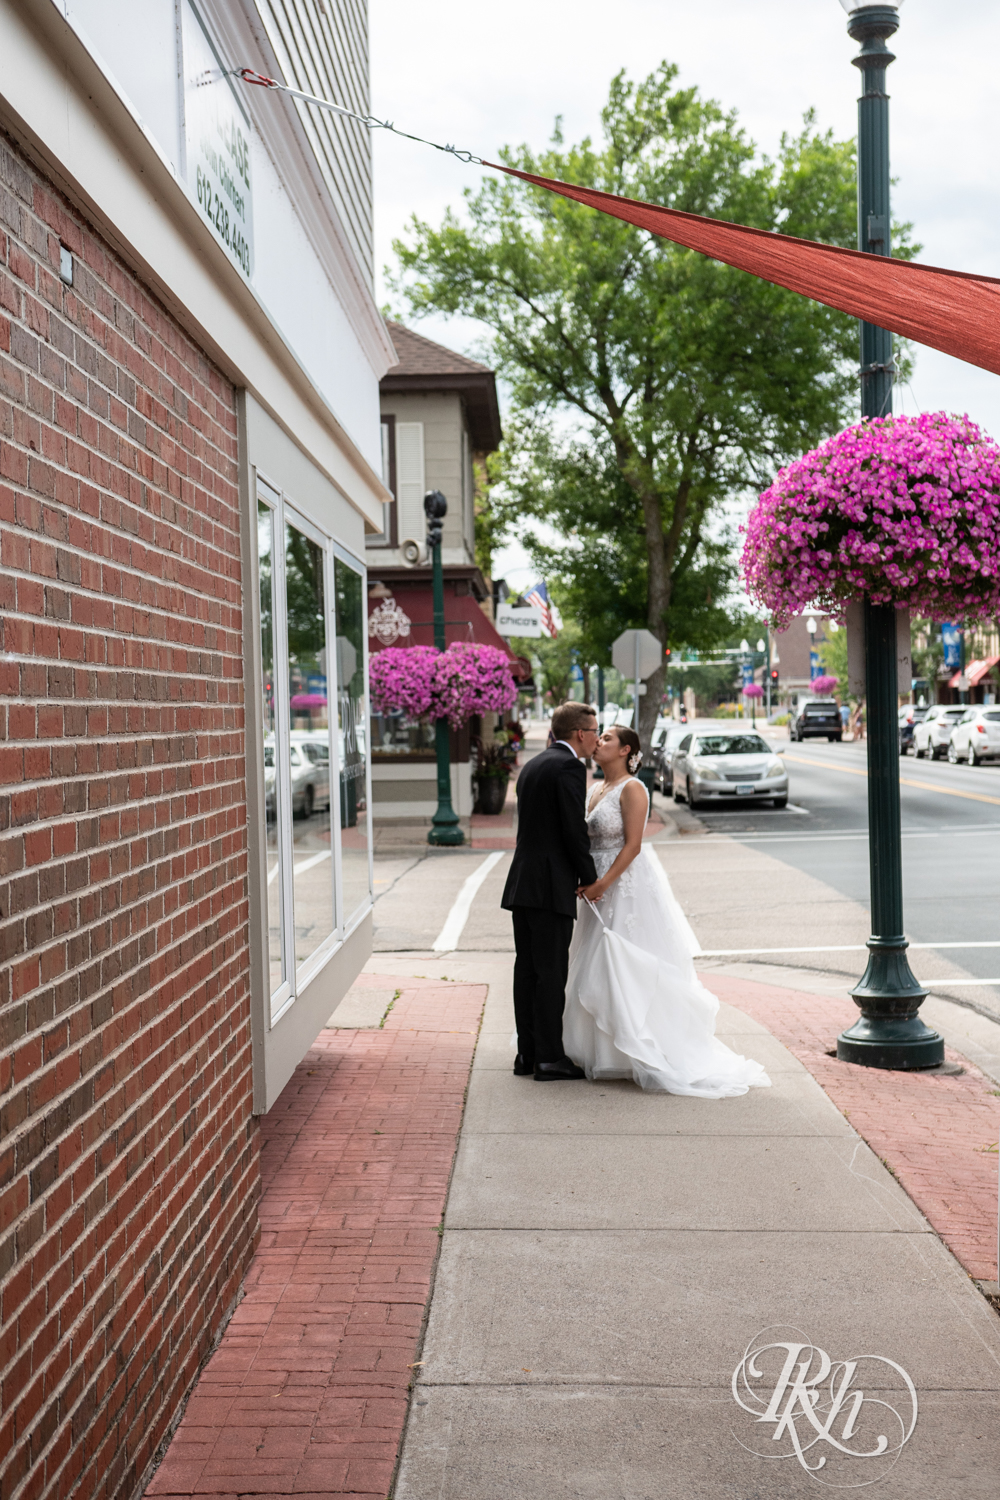 Bride and groom kiss at Kellerman's Event Center wedding in White Bear Lake, Minnesota.